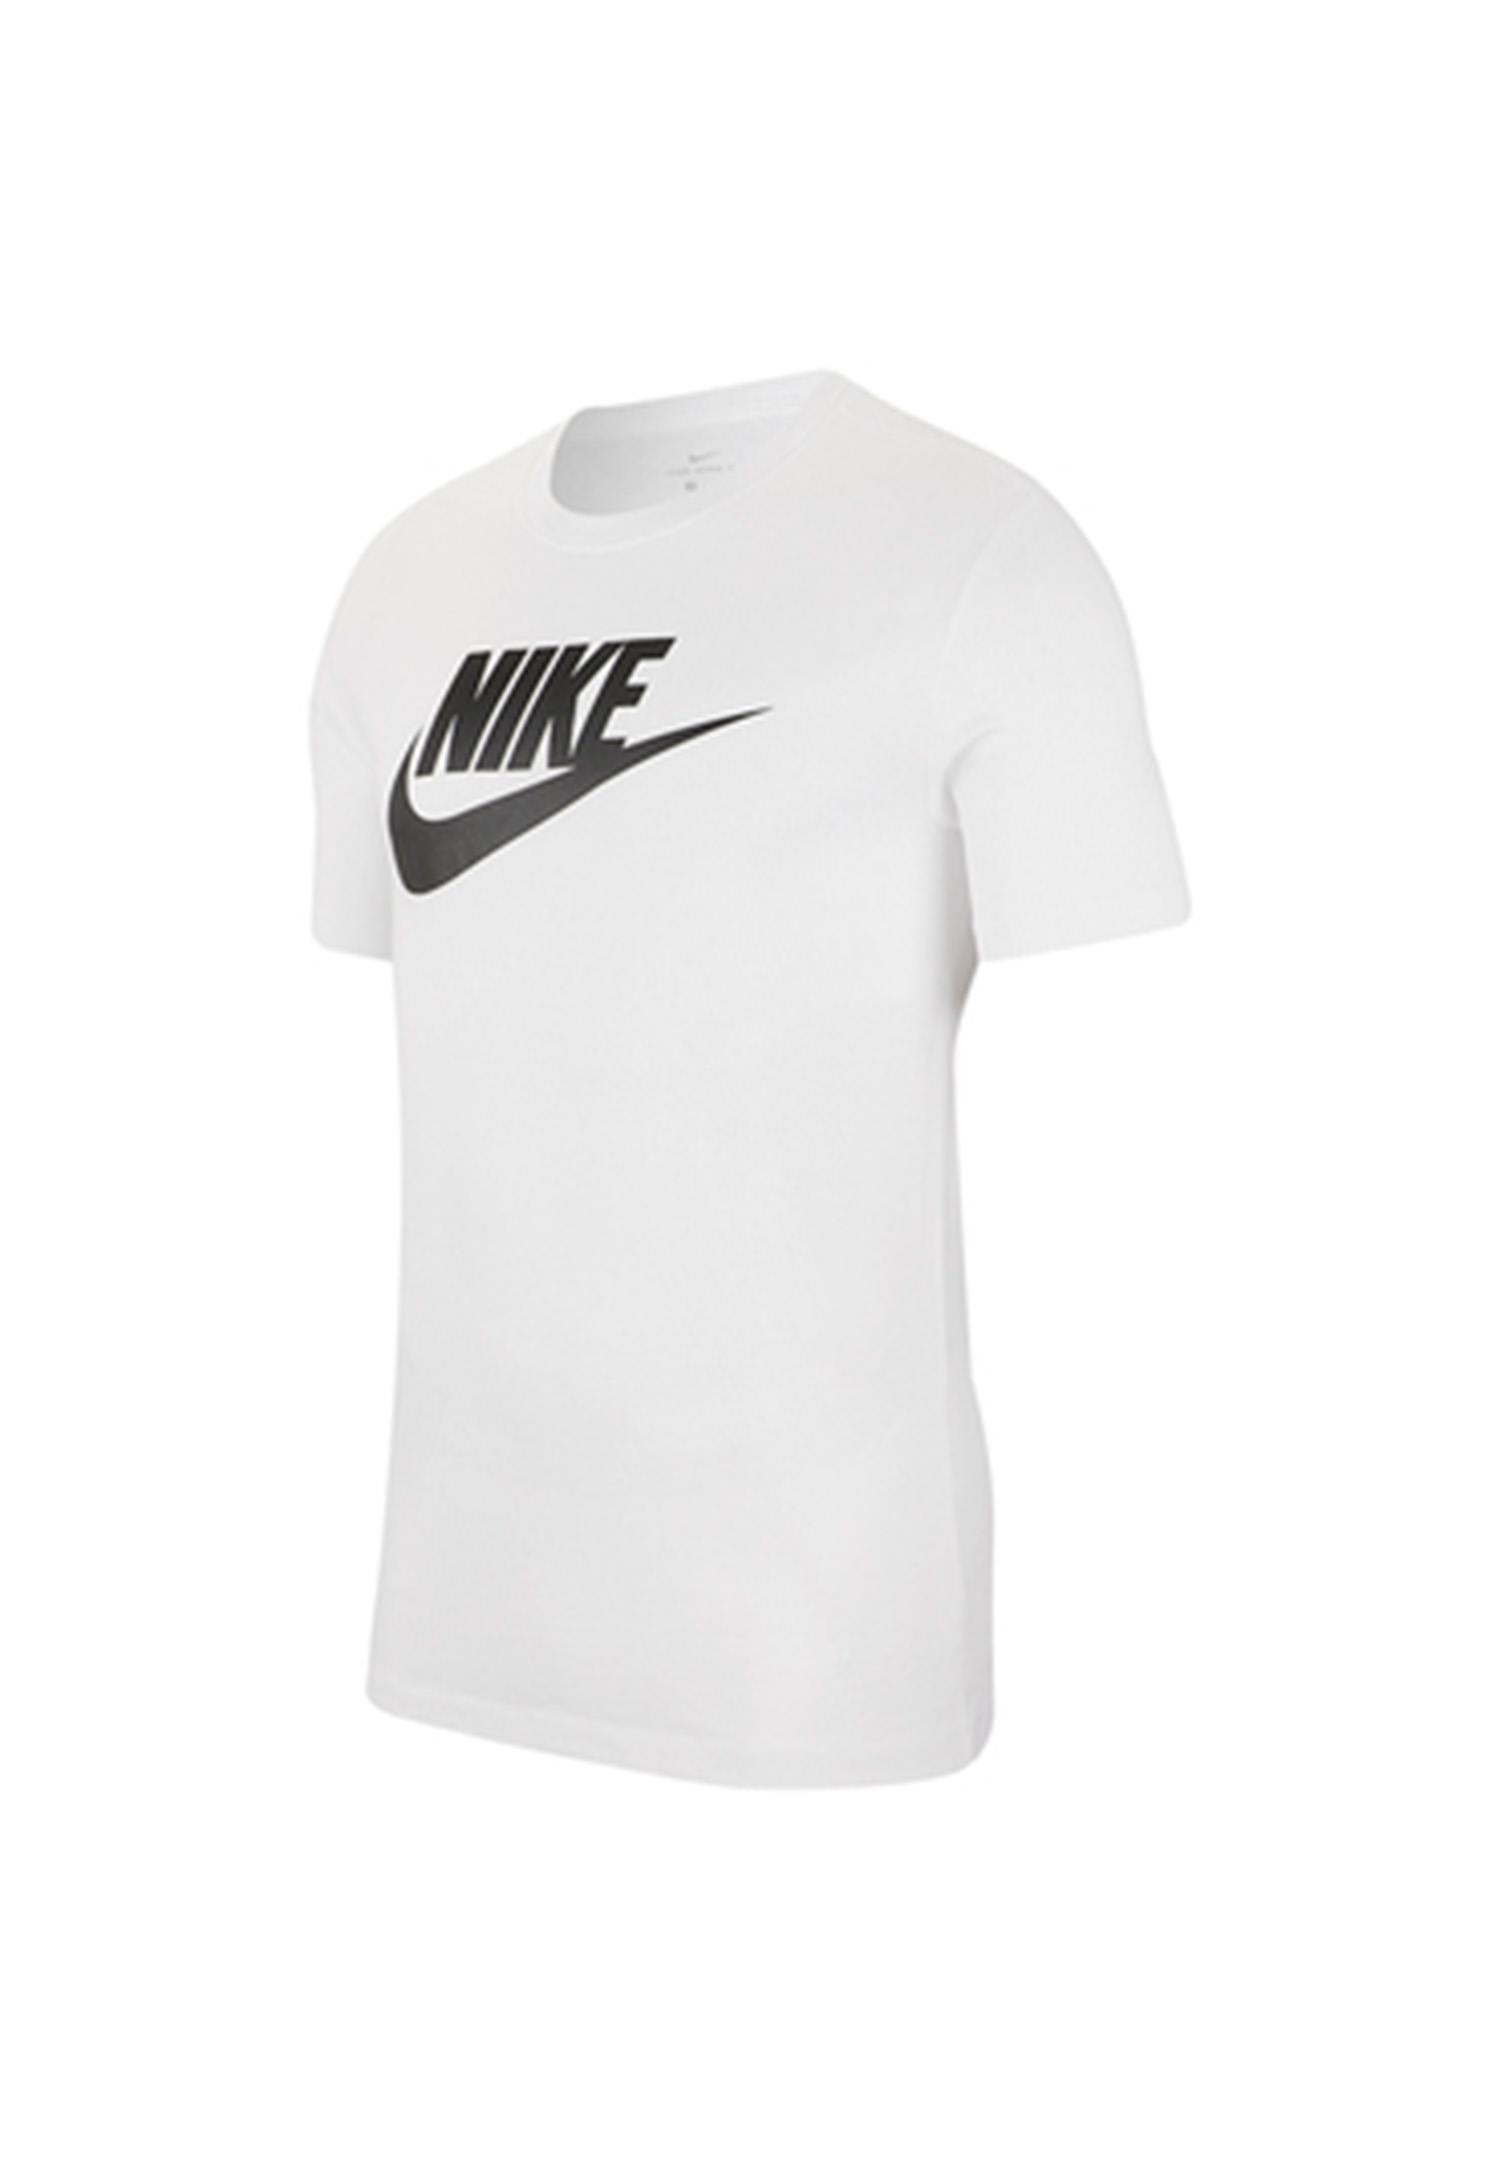 Nike Sportswear Tee Herren Tshirt Shirt weiss AR5004